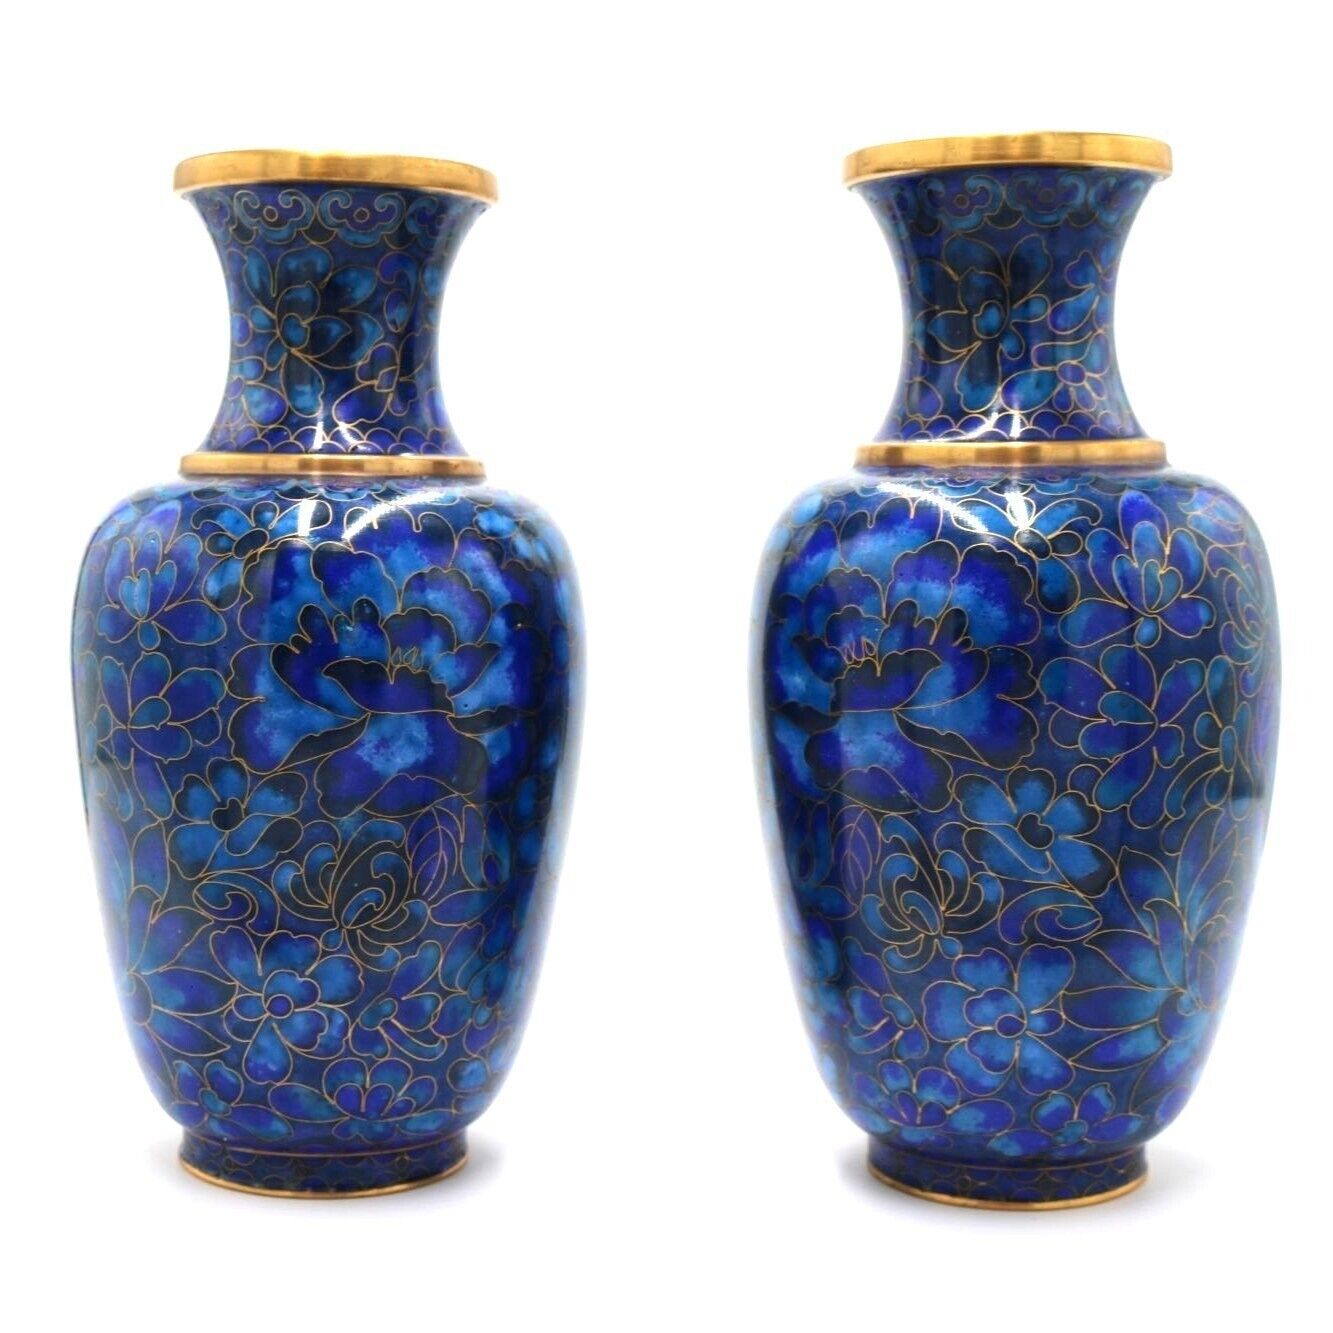 Pair of stunning, vintage asian cloisonne vases in a cobalt blue floral pattern.